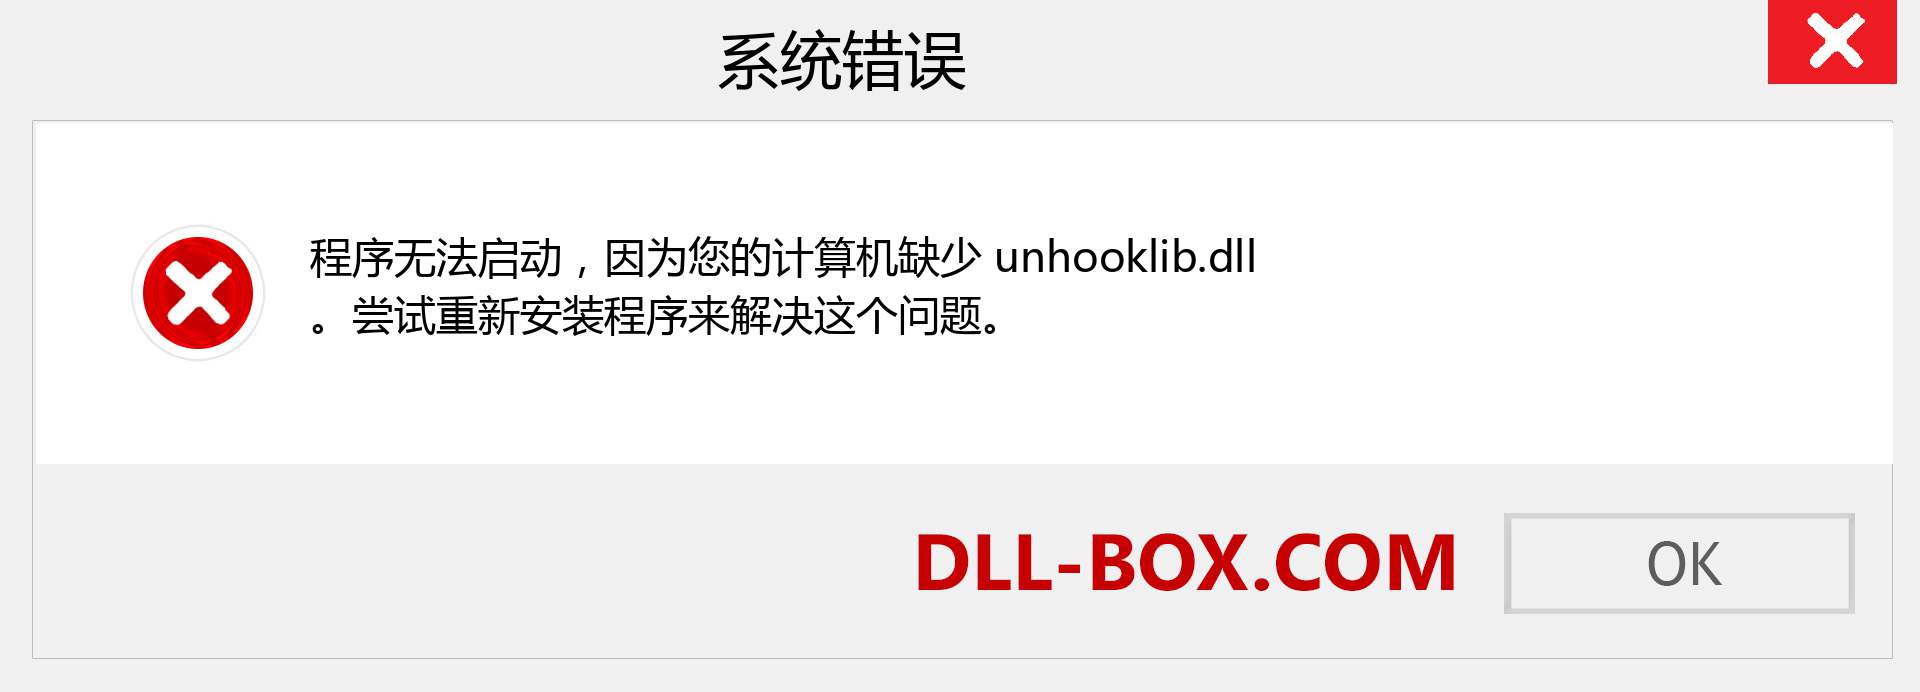 unhooklib.dll 文件丢失？。 适用于 Windows 7、8、10 的下载 - 修复 Windows、照片、图像上的 unhooklib dll 丢失错误